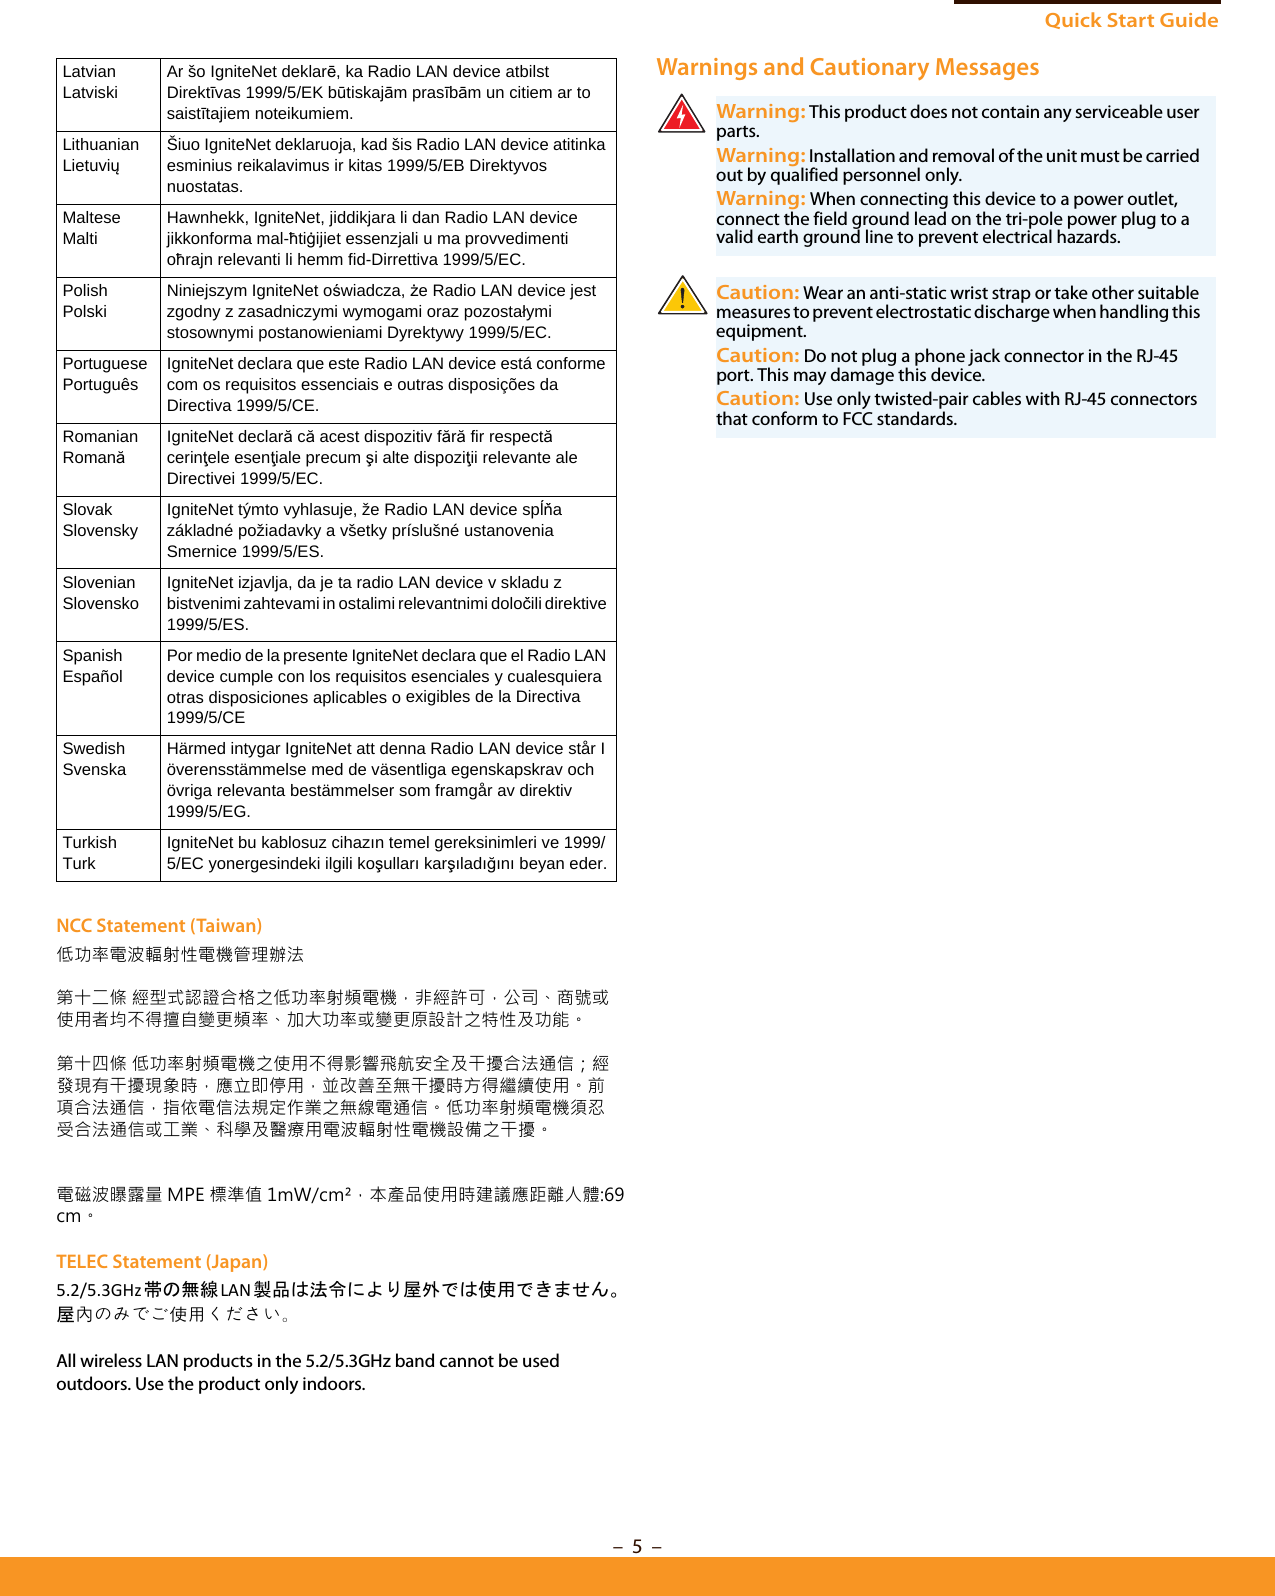 Quick Start Guide– 5  –NCC Statement (Taiwan)低功率電波輻射性電機管理辦法第十二條 經型式認證合格之低功率射頻電機，非經許可，公司、商號或使用者均不得擅自變更頻率、加大功率或變更原設計之特性及功能。第十四條 低功率射頻電機之使用不得影響飛航安全及干擾合法通信；經發現有干擾現象時，應立即停用，並改善至無干擾時方得繼續使用。前項合法通信，指依電信法規定作業之無線電通信。低功率射頻電機須忍受合法通信或工業、科學及醫療用電波輻射性電機設備之干擾。電磁波曝露量 MPE 標準值 1mW/cm²，本產品使用時建議應距離人體:69 cm。TELEC Statement (Japan)5.2/5.3GHz帯の無線LAN製品は法令により屋外では使用できません。屋內のみでご使用ください。All wireless LAN products in the 5.2/5.3GHz band cannot be used outdoors. Use the product only indoors.Warnings and Cautionary MessagesLatvianLatviskiAr šo IgniteNet deklarē, ka Radio LAN device atbilst Direktīvas 1999/5/EK būtiskajām prasībām un citiem ar to saistītajiem noteikumiem.LithuanianLietuviųŠiuo IgniteNet deklaruoja, kad šis Radio LAN device atitinka esminius reikalavimus ir kitas 1999/5/EB Direktyvos nuostatas.MalteseMaltiHawnhekk, IgniteNet, jiddikjara li dan Radio LAN device jikkonforma mal-ħtiġijiet essenzjali u ma provvedimenti oħrajn relevanti li hemm fid-Dirrettiva 1999/5/EC.PolishPolskiNiniejszym IgniteNet oświadcza, że Radio LAN device jest zgodny z zasadniczymi wymogami oraz pozostałymi stosownymi postanowieniami Dyrektywy 1999/5/EC.PortuguesePortuguêsIgniteNet declara que este Radio LAN device está conforme com os requisitos essenciais e outras disposições da Directiva 1999/5/CE.RomanianRomanăIgniteNet declară că acest dispozitiv fără fir respectă cerinţele esenţiale precum şi alte dispoziţii relevante ale Directivei 1999/5/EC.SlovakSlovenskyIgniteNet týmto vyhlasuje, že Radio LAN device spĺňa základné požiadavky a všetky príslušné ustanovenia Smernice 1999/5/ES.SlovenianSlovenskoIgniteNet izjavlja, da je ta radio LAN device v skladu z bistvenimi zahtevami in ostalimi relevantnimi določili direktive 1999/5/ES.SpanishEspañolPor medio de la presente IgniteNet declara que el Radio LAN device cumple con los requisitos esenciales y cualesquiera otras disposiciones aplicables o exigibles de la Directiva 1999/5/CESwedishSvenskaHärmed intygar IgniteNet att denna Radio LAN device står I överensstämmelse med de väsentliga egenskapskrav och övriga relevanta bestämmelser som framgår av direktiv 1999/5/EG.TurkishTurkIgniteNet bu kablosuz cihazın temel gereksinimleri ve 1999/5/EC yonergesindeki ilgili koşulları karşıladığını beyan eder.Warning: This product does not contain any serviceable user parts.Warning: Installation and removal of the unit must be carried out by qualified personnel only.Warning: When connecting this device to a power outlet, connect the field ground lead on the tri-pole power plug to a valid earth ground line to prevent electrical hazards.Caution: Wear an anti-static wrist strap or take other suitable measures to prevent electrostatic discharge when handling this equipment.Caution: Do not plug a phone jack connector in the RJ-45 port. This may damage this device. Caution: Use only twisted-pair cables with RJ-45 connectors that conform to FCC standards. 